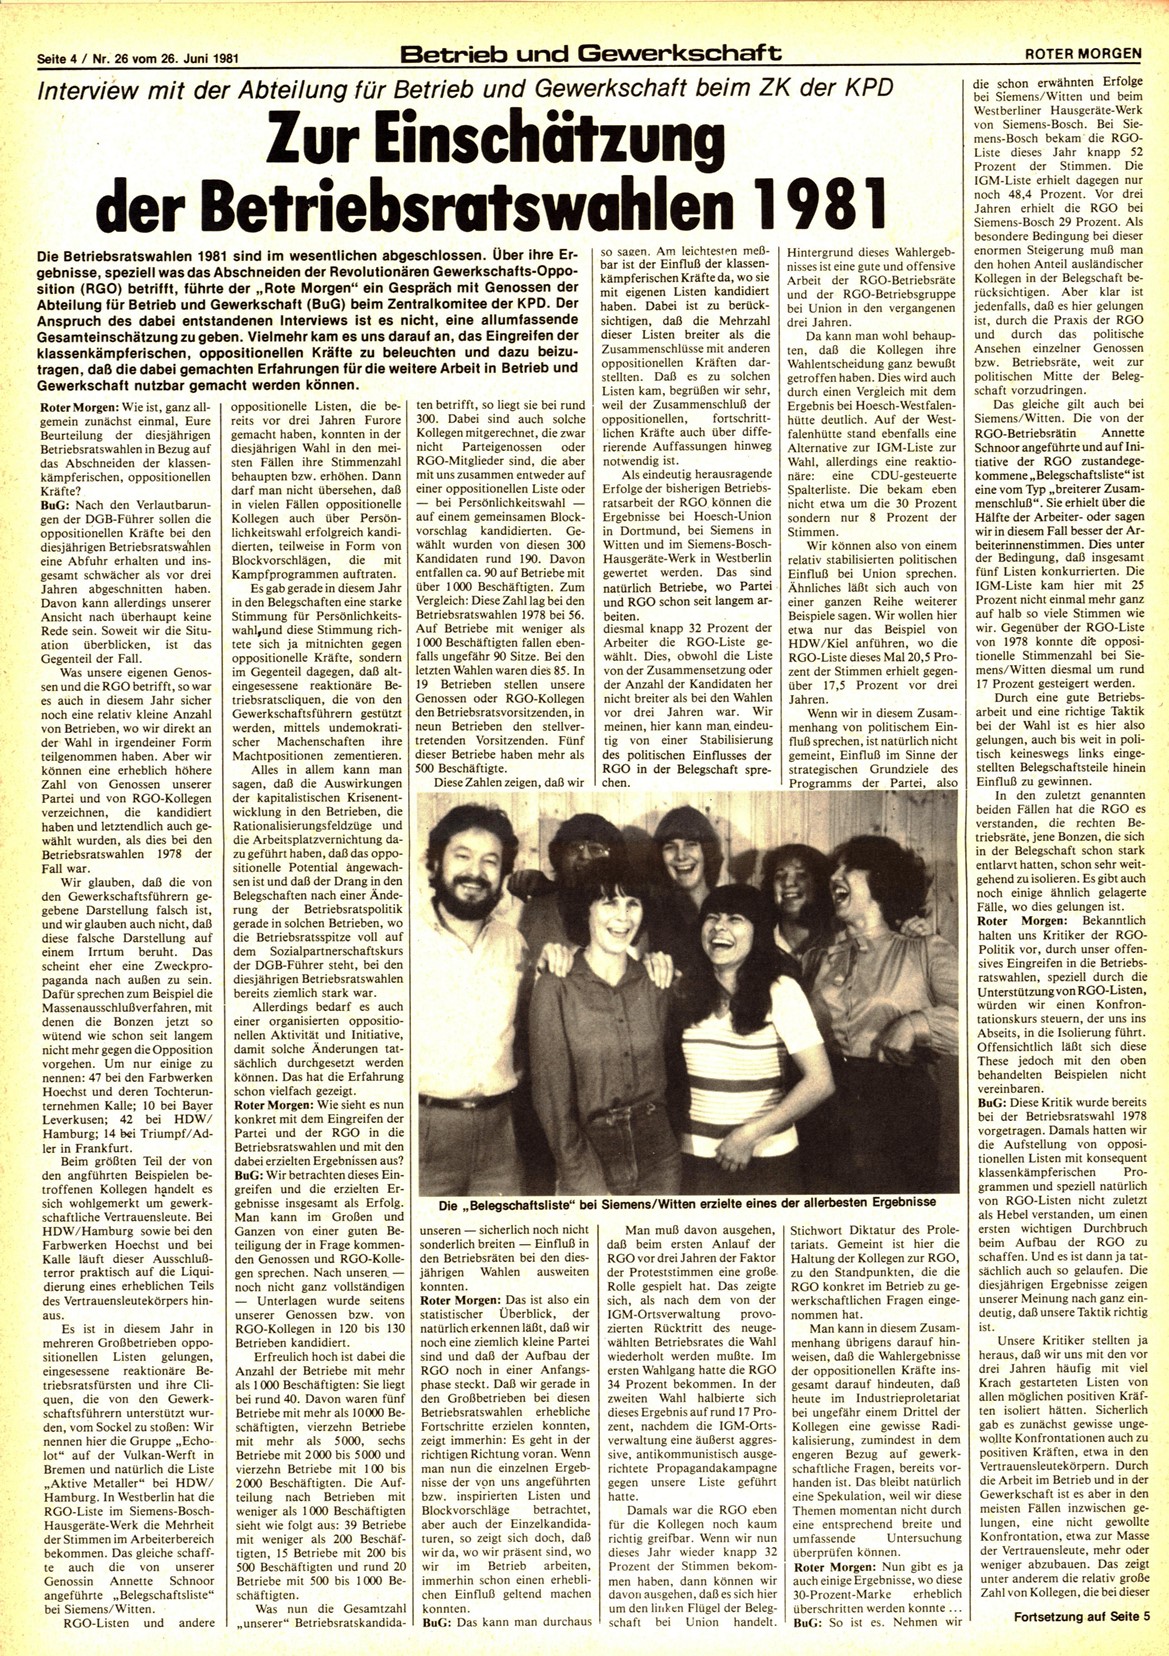 Roter Morgen, 15. Jg., 26. Juni 1981, Nr. 26, Seite 4